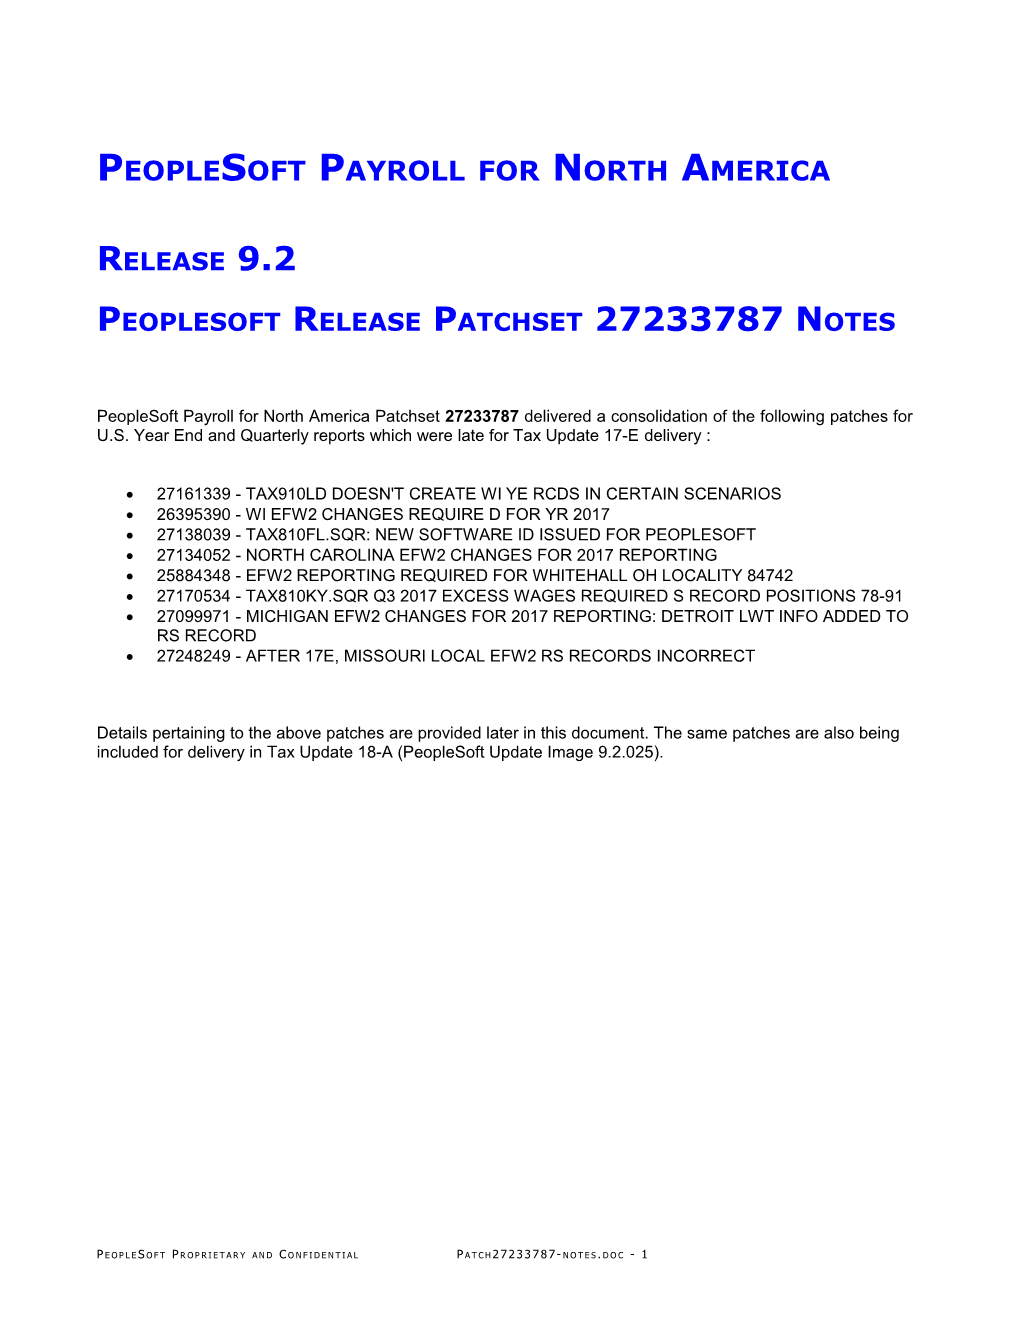 9.10 - Peoplesoft Payroll Tax Update 17-E